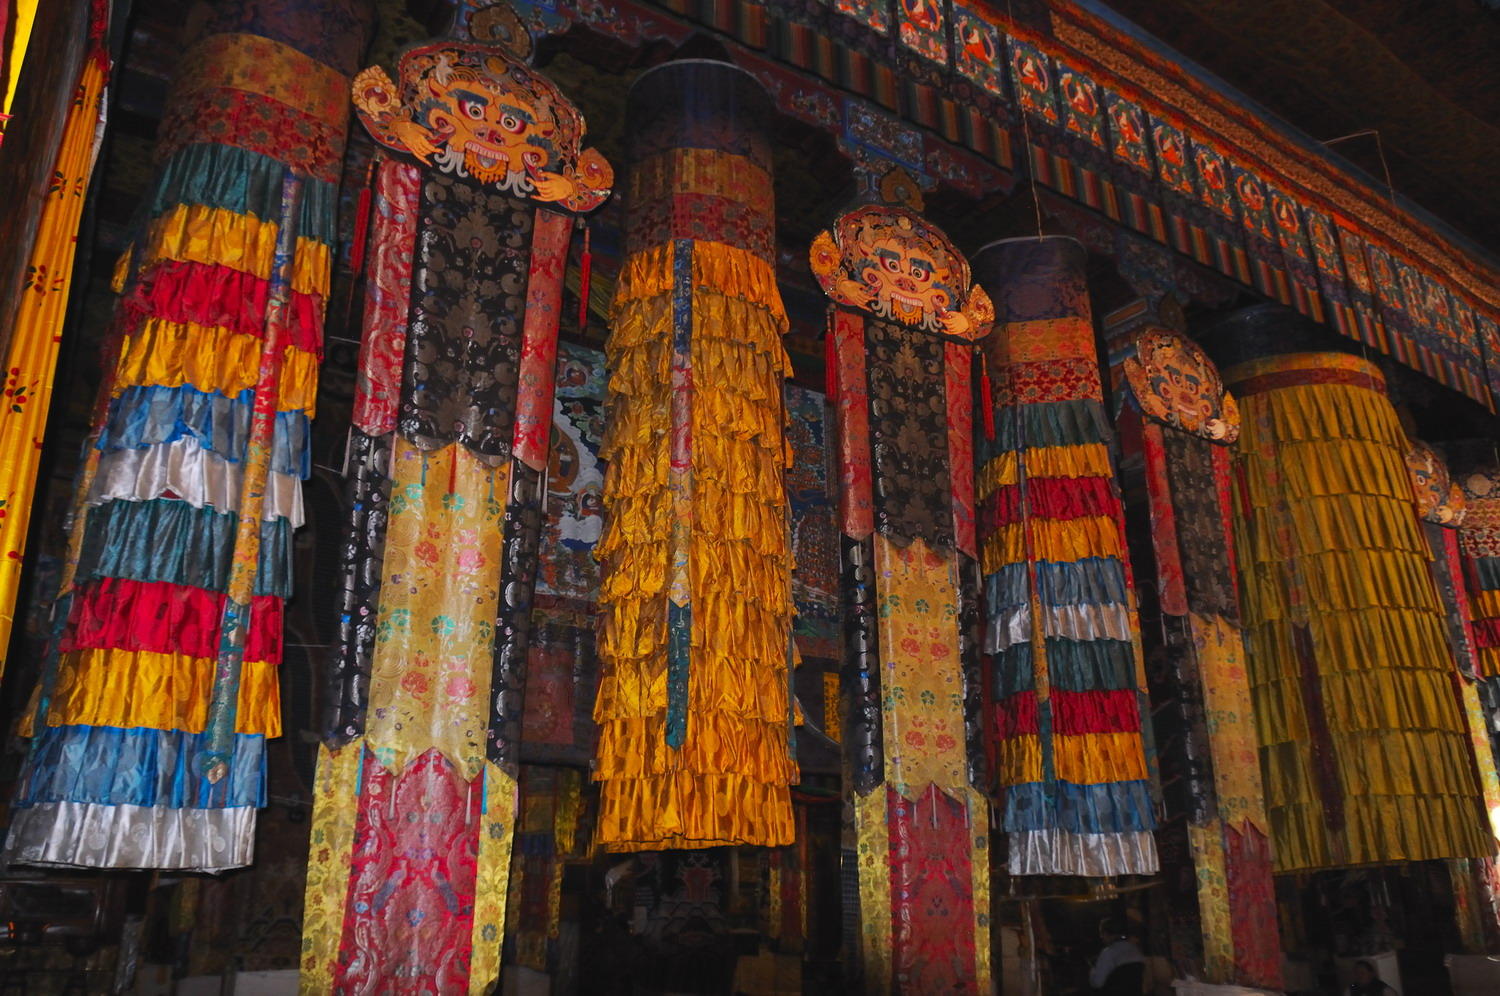 DSC_0693A1 - Ganden Monastery